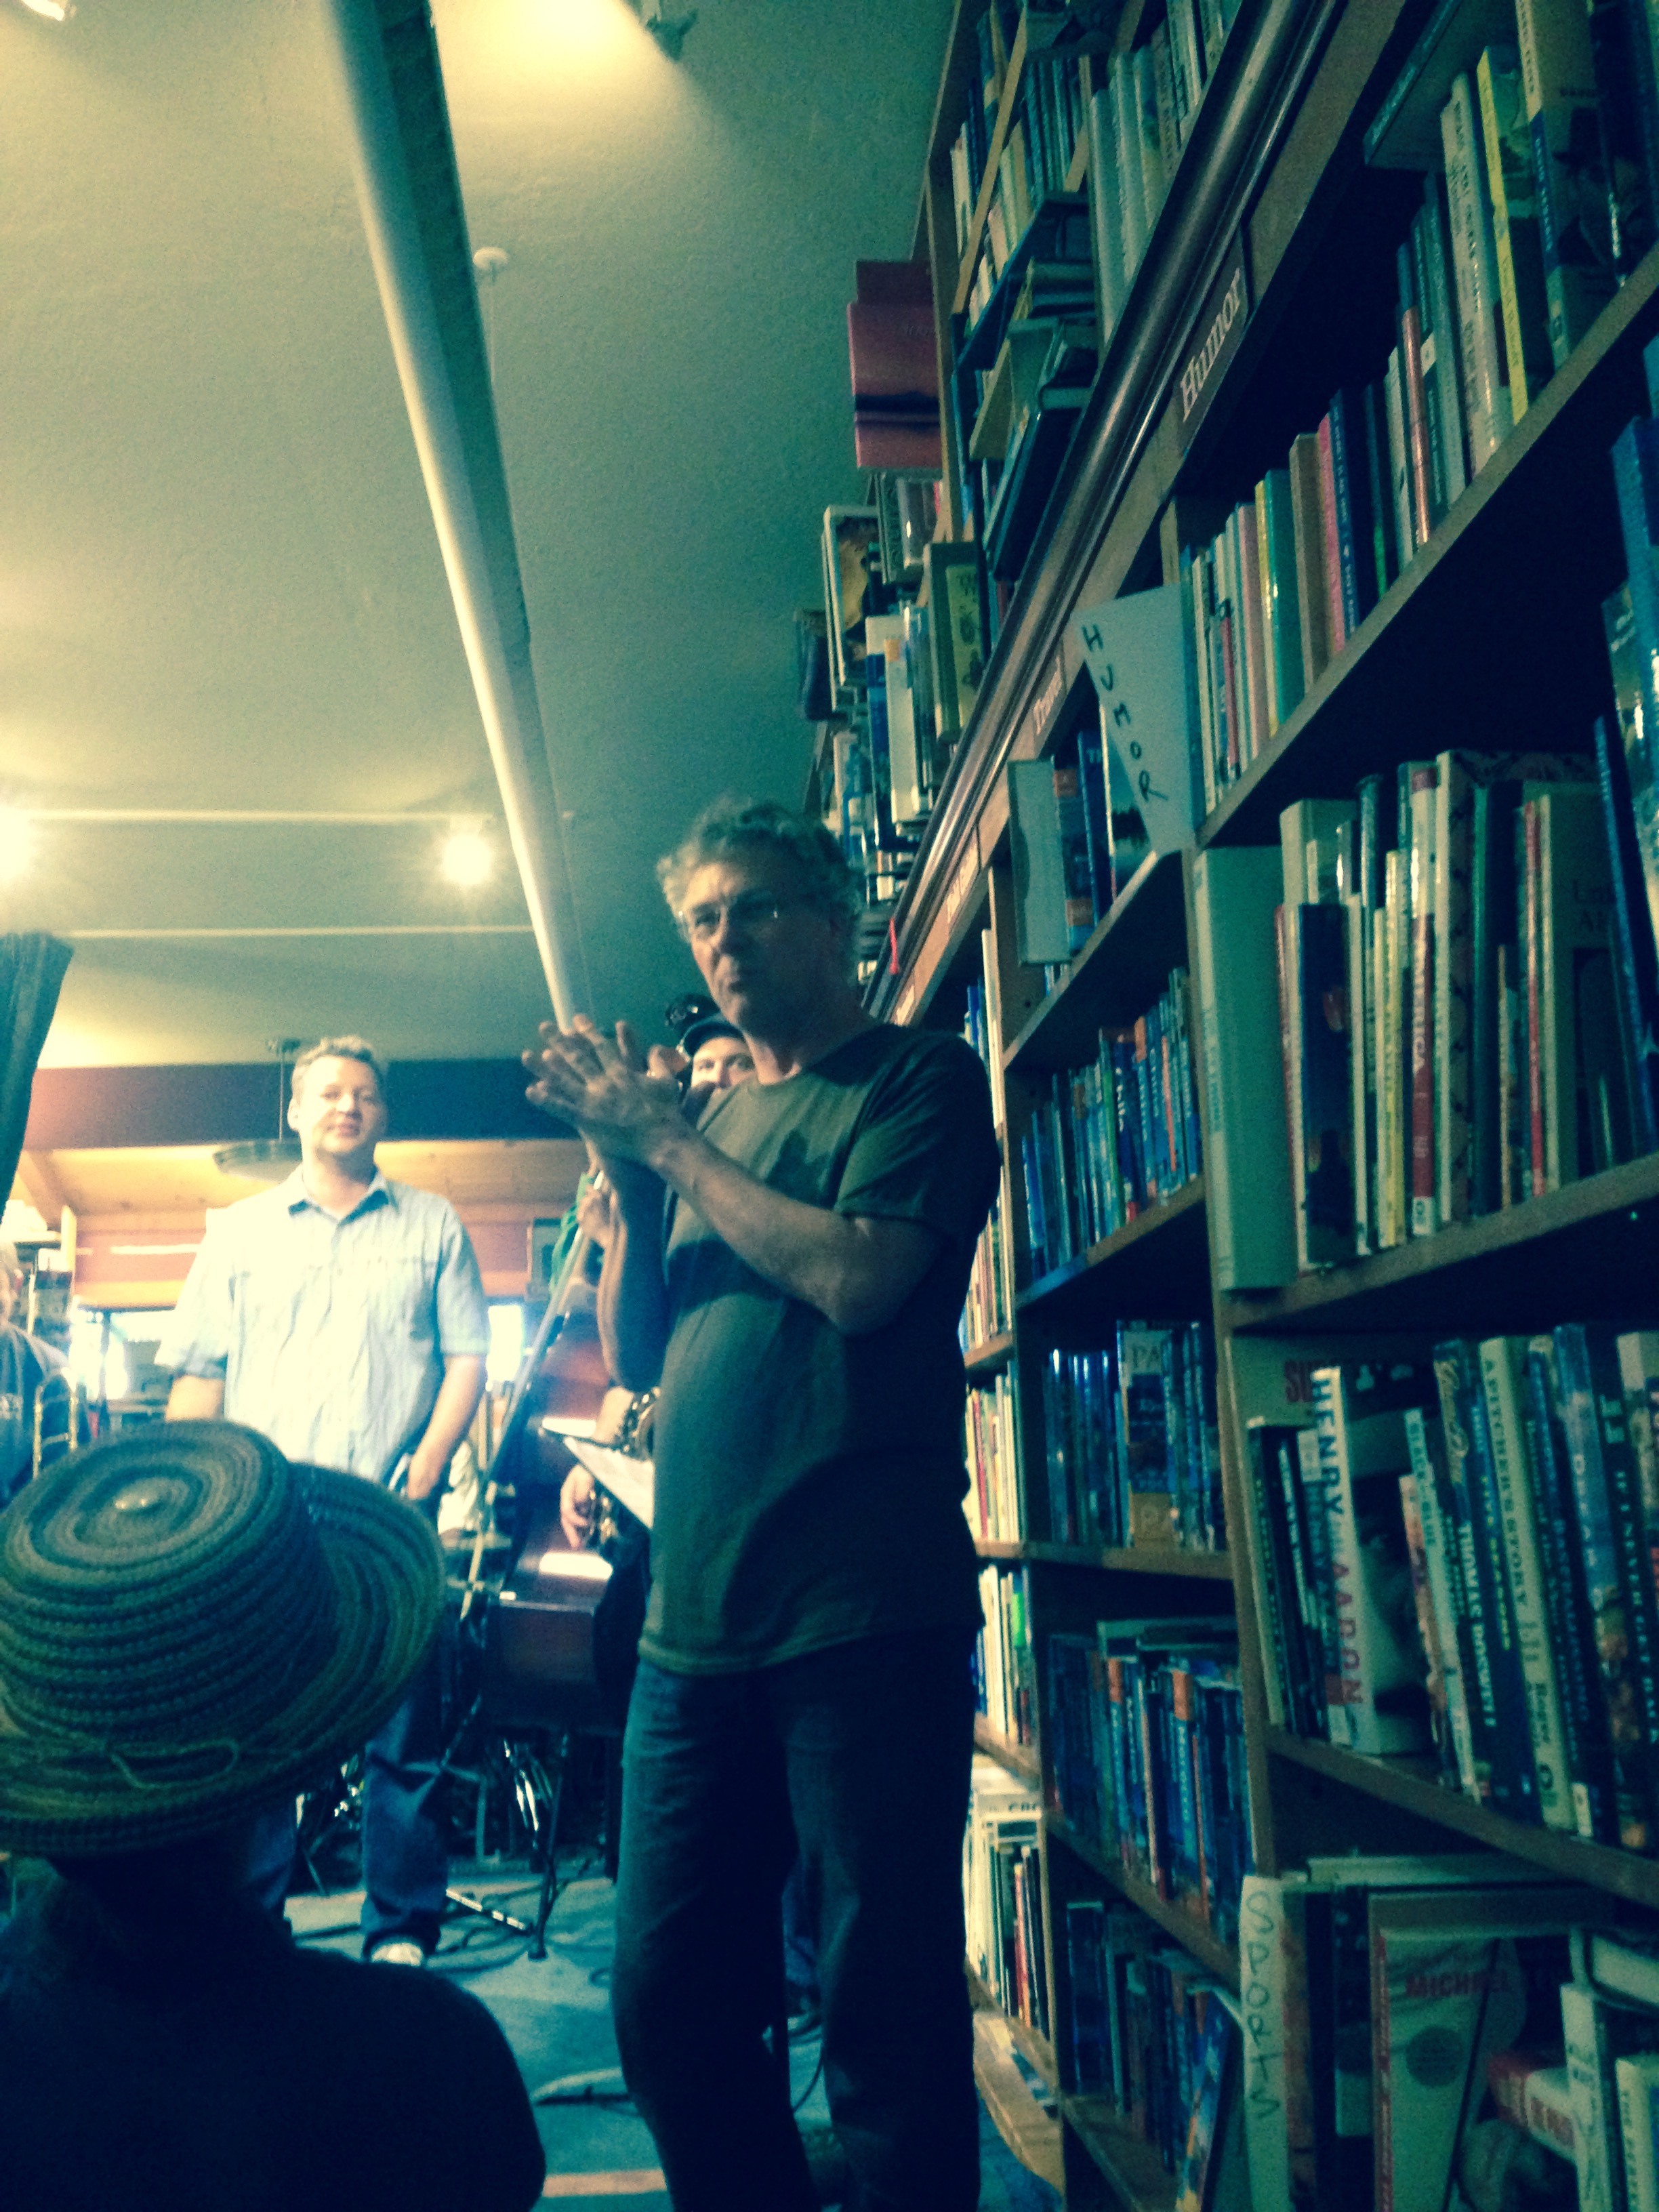 With Joel Ryan behind him, bookseller Eric Whittington introducing Jimmy Ryan's Bird & Beckett Bebop Band.